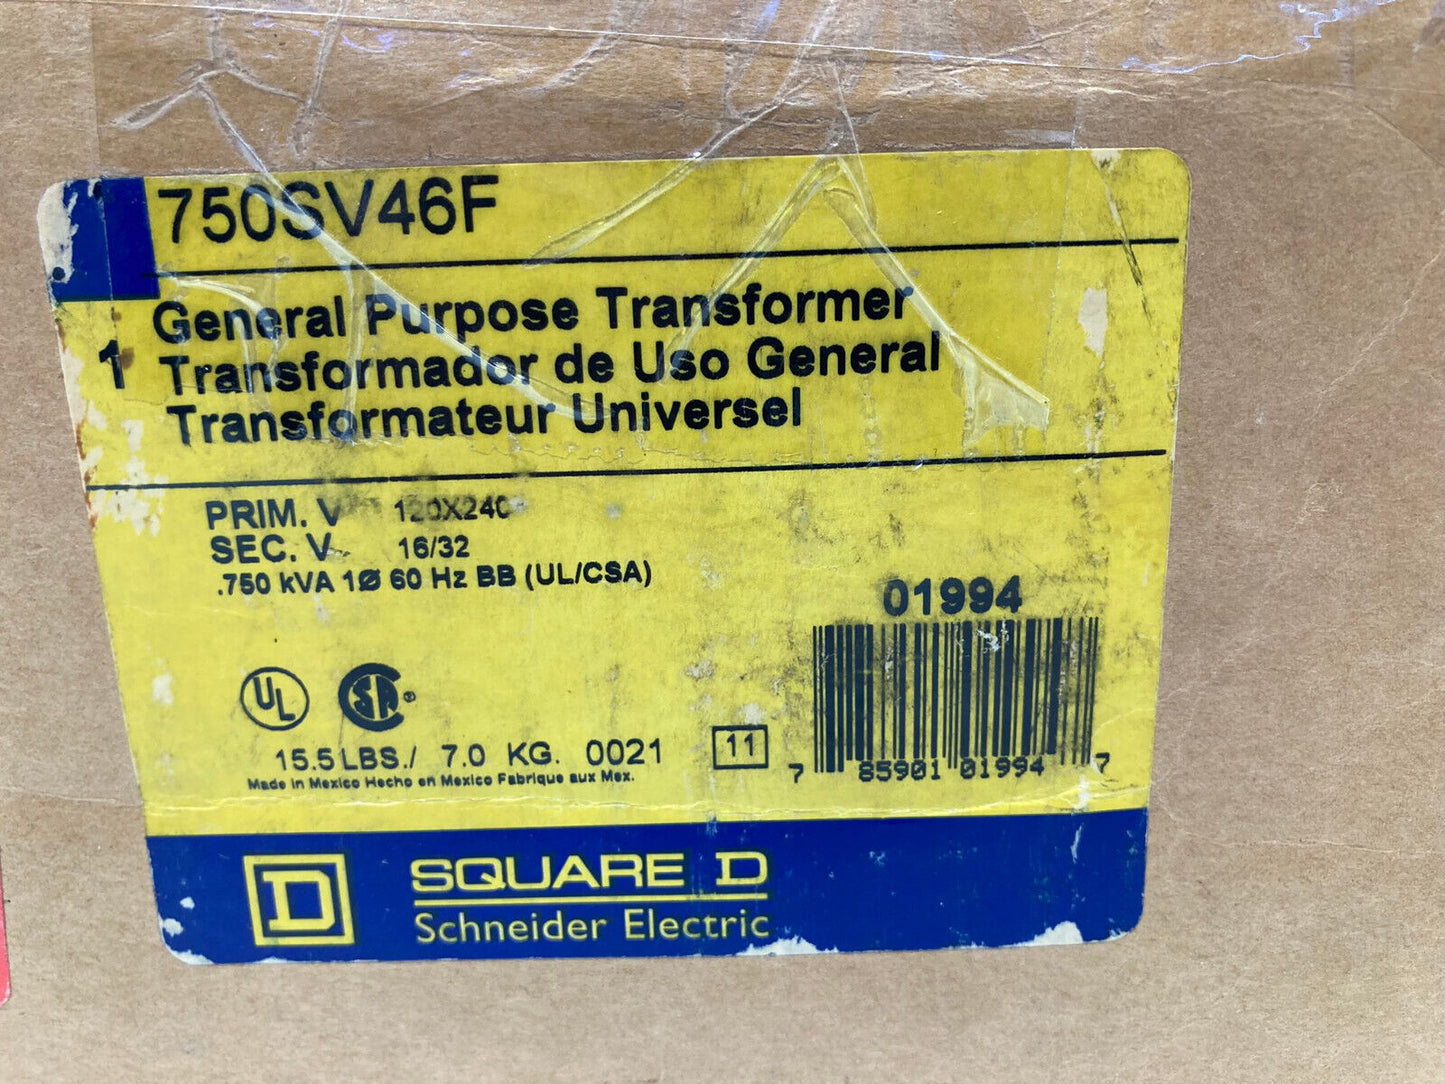 Square D Schneider 750SV46F Transformer, overnight available